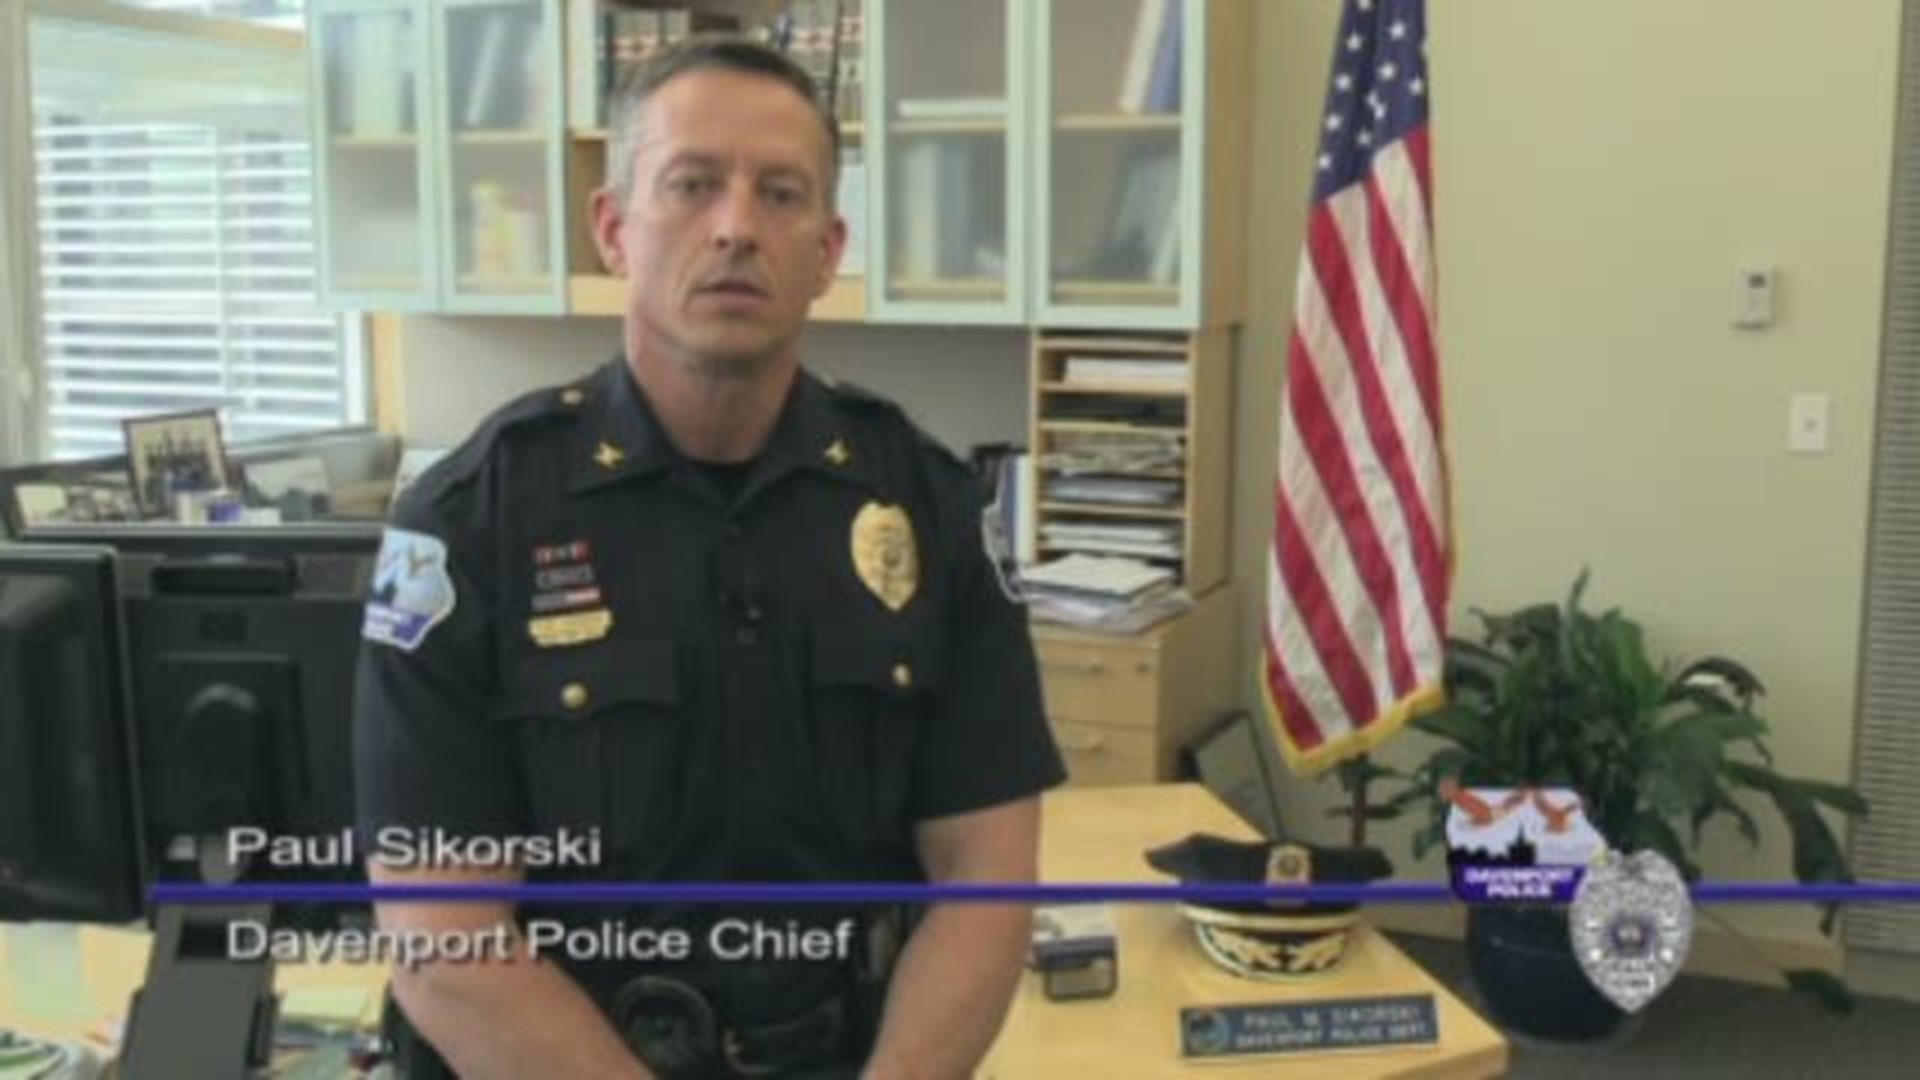 Davenport Chief Sikorski says "Lock it up"